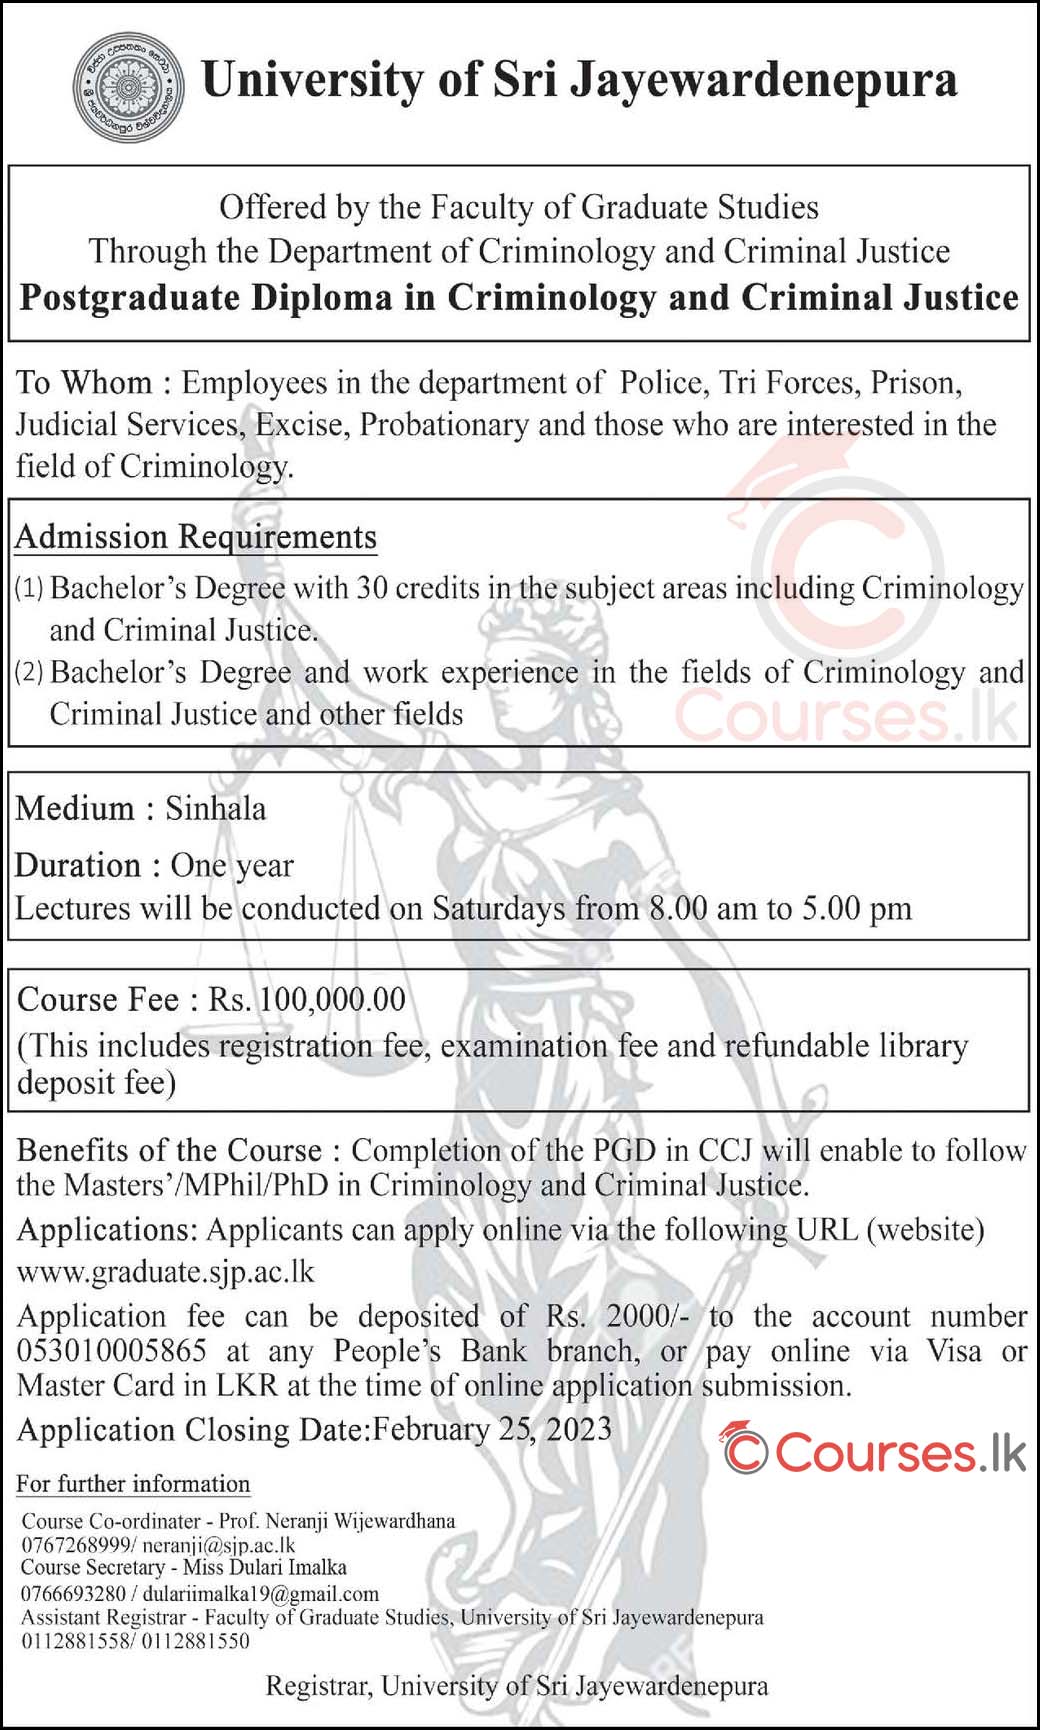 Postgraduate Diploma in Criminology and Criminal Justice 2023 - University of Sri Jayewardenepura